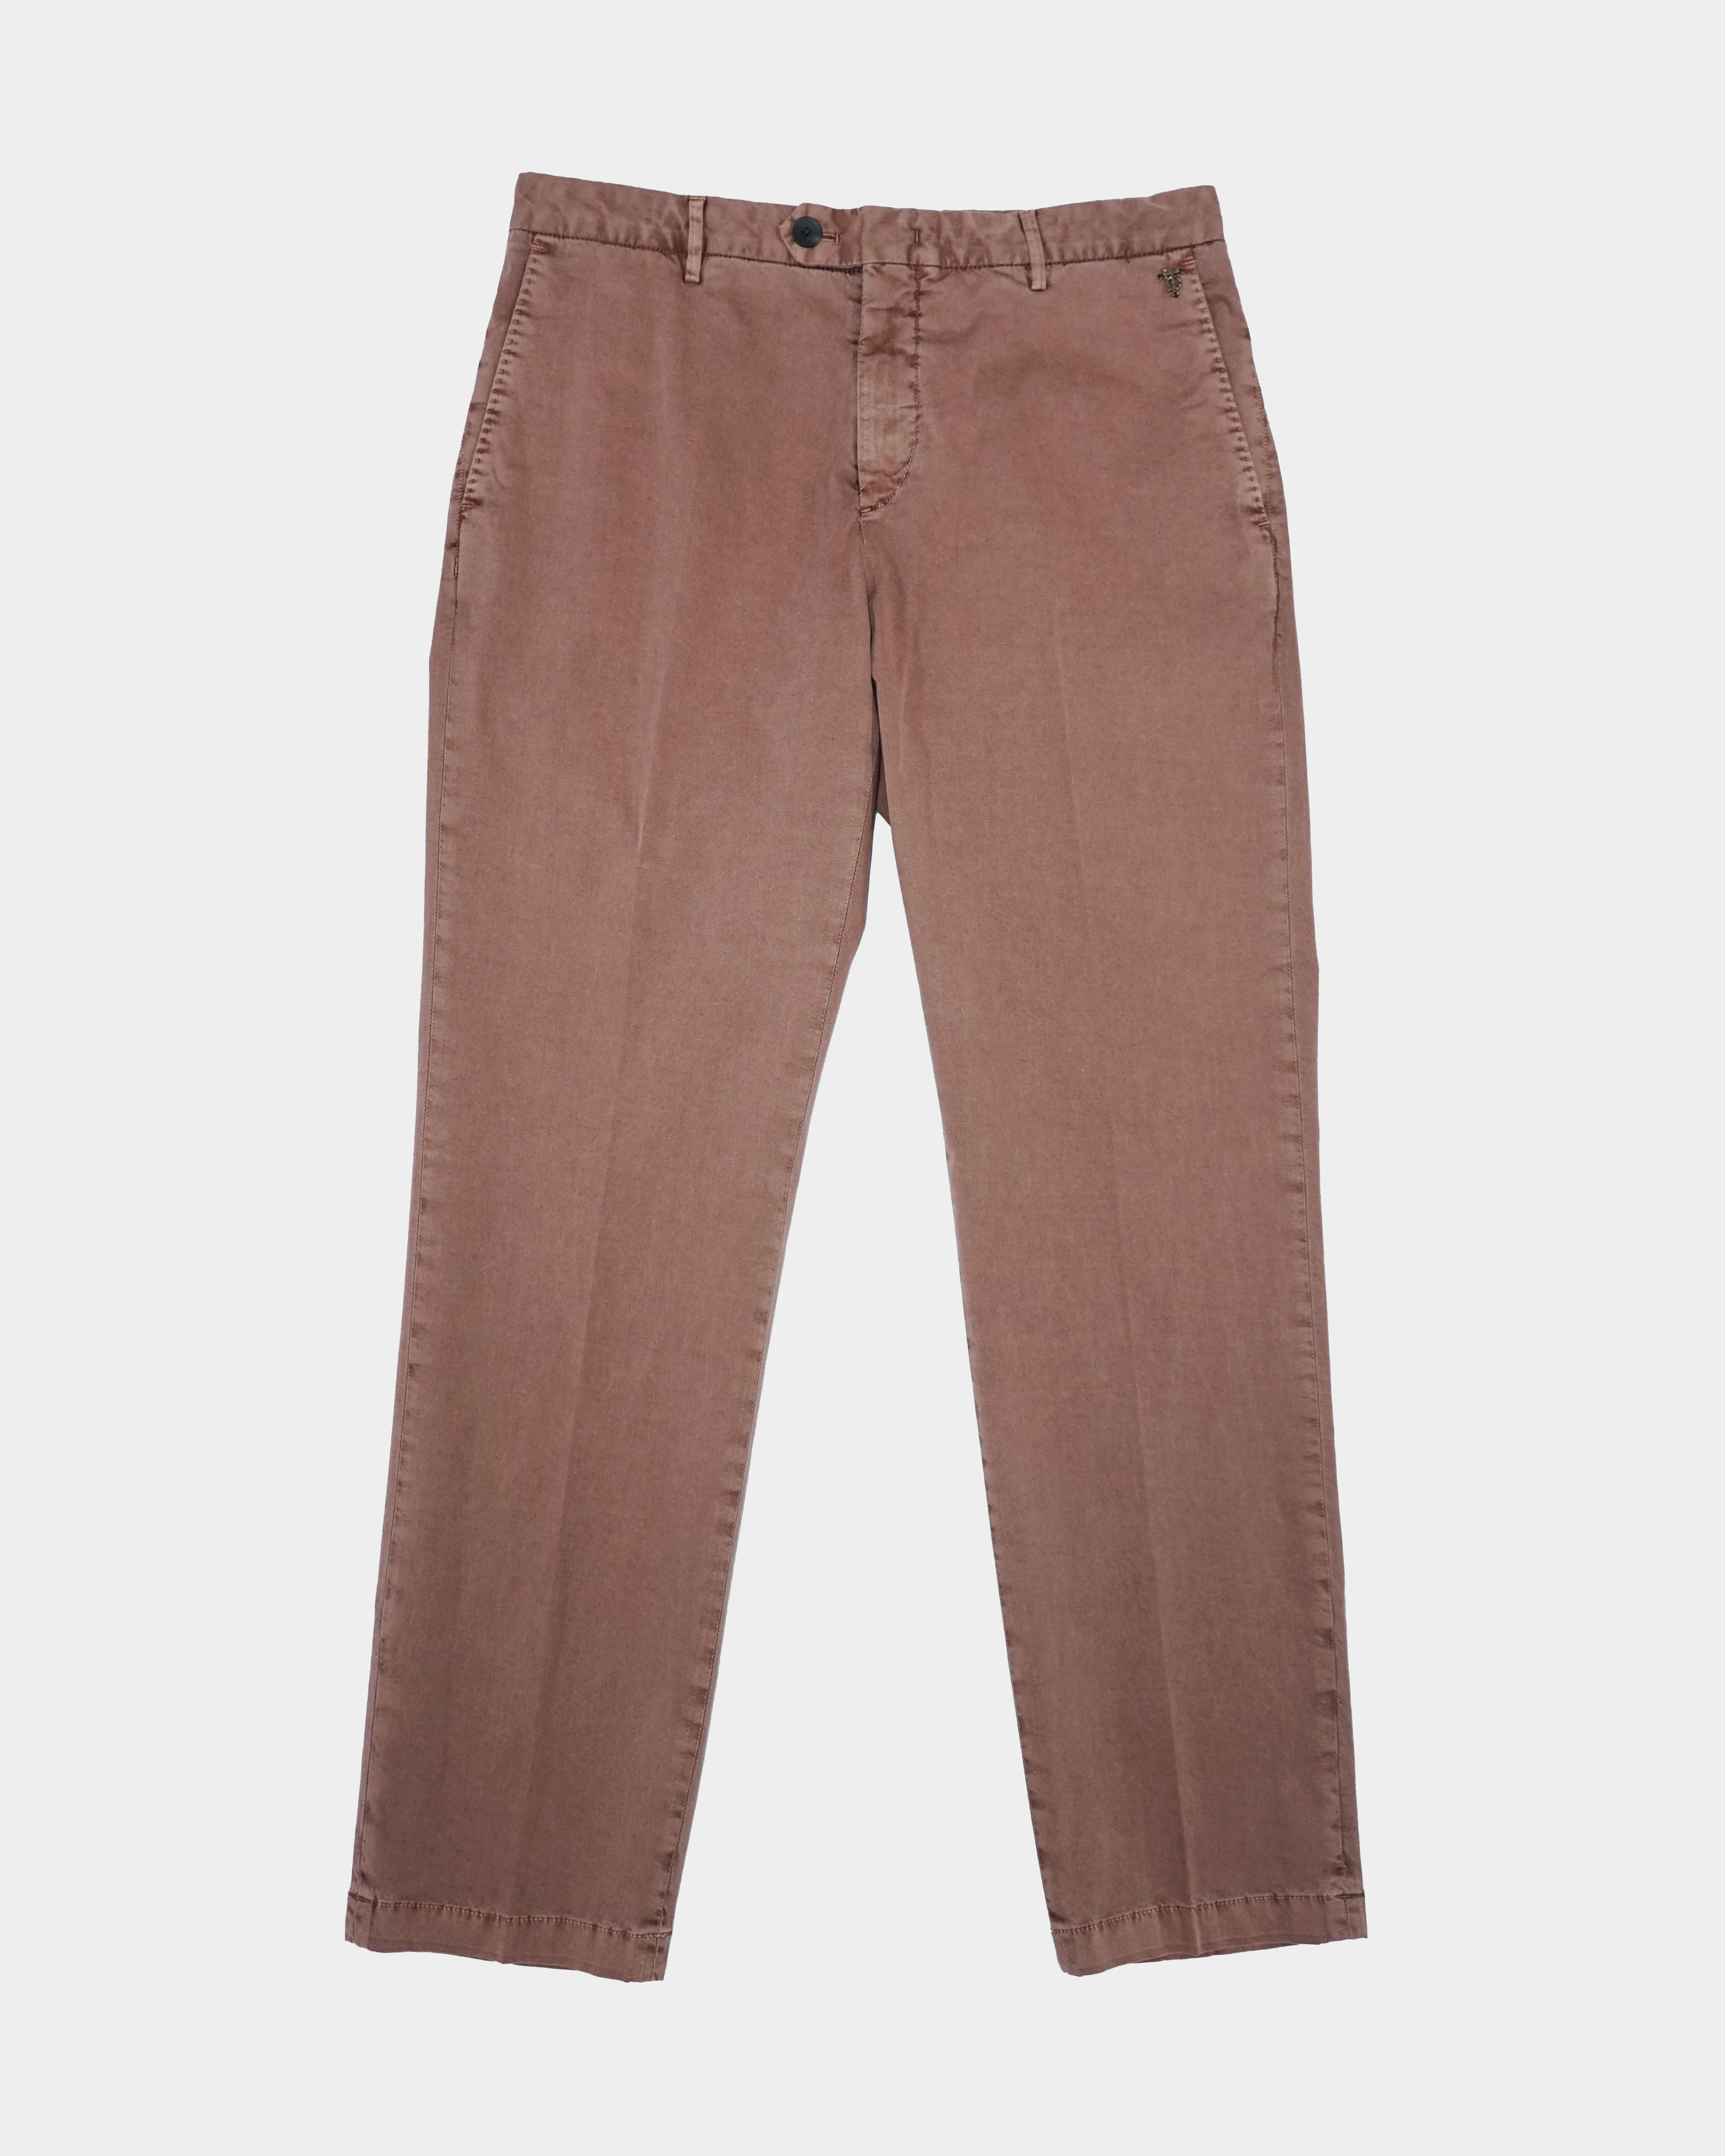 Snappy R.C fit cotton pants - Brickbirbante(비르반테)